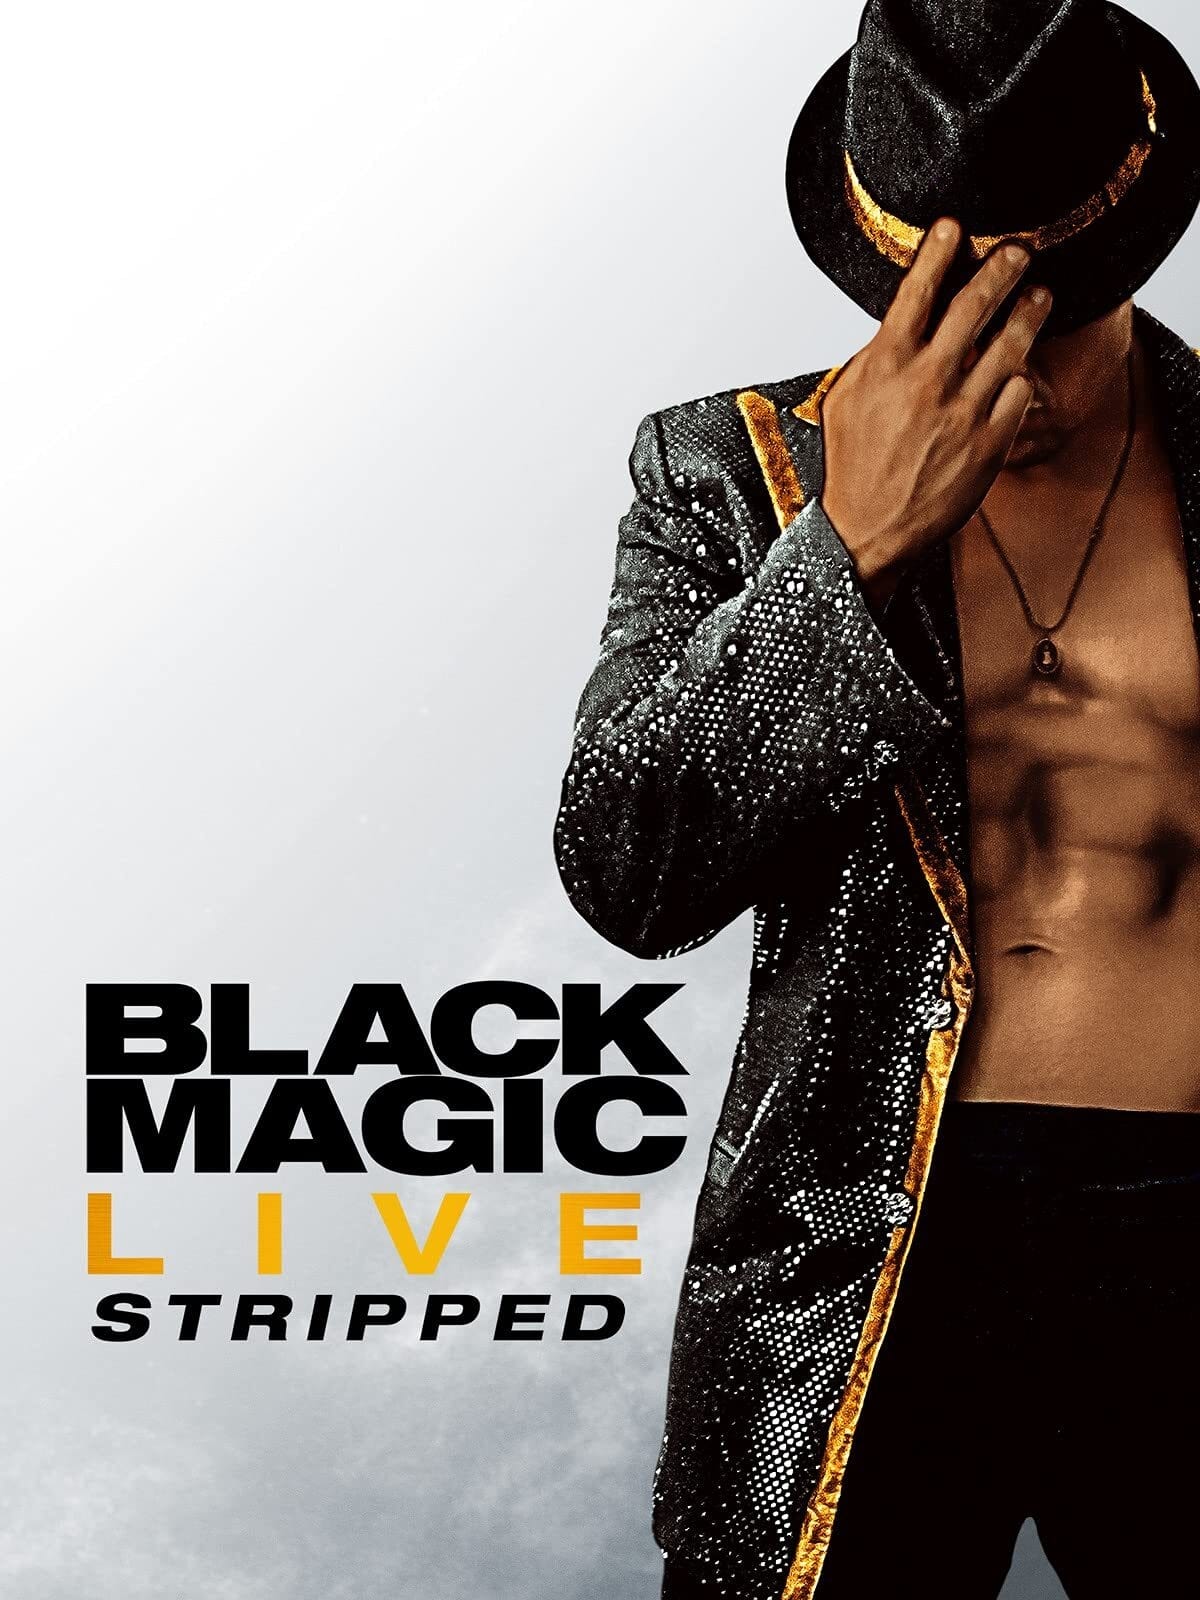 Black Magic Live: Stripped